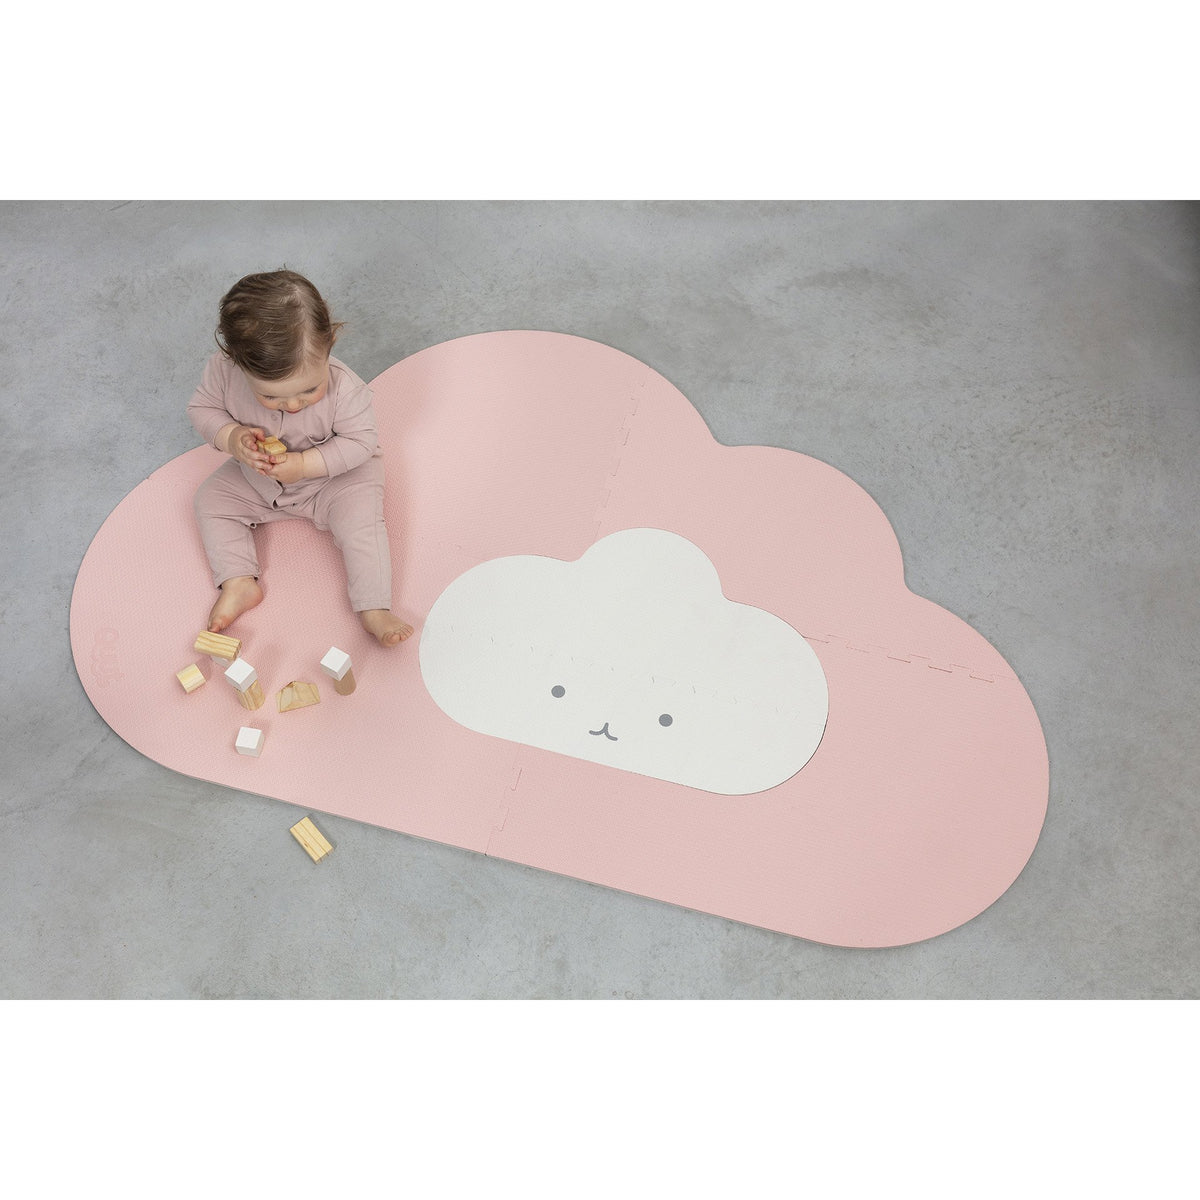 quut-playmat-head-in-the-clouds-s-145-x-90cm-blush-rose- (6)